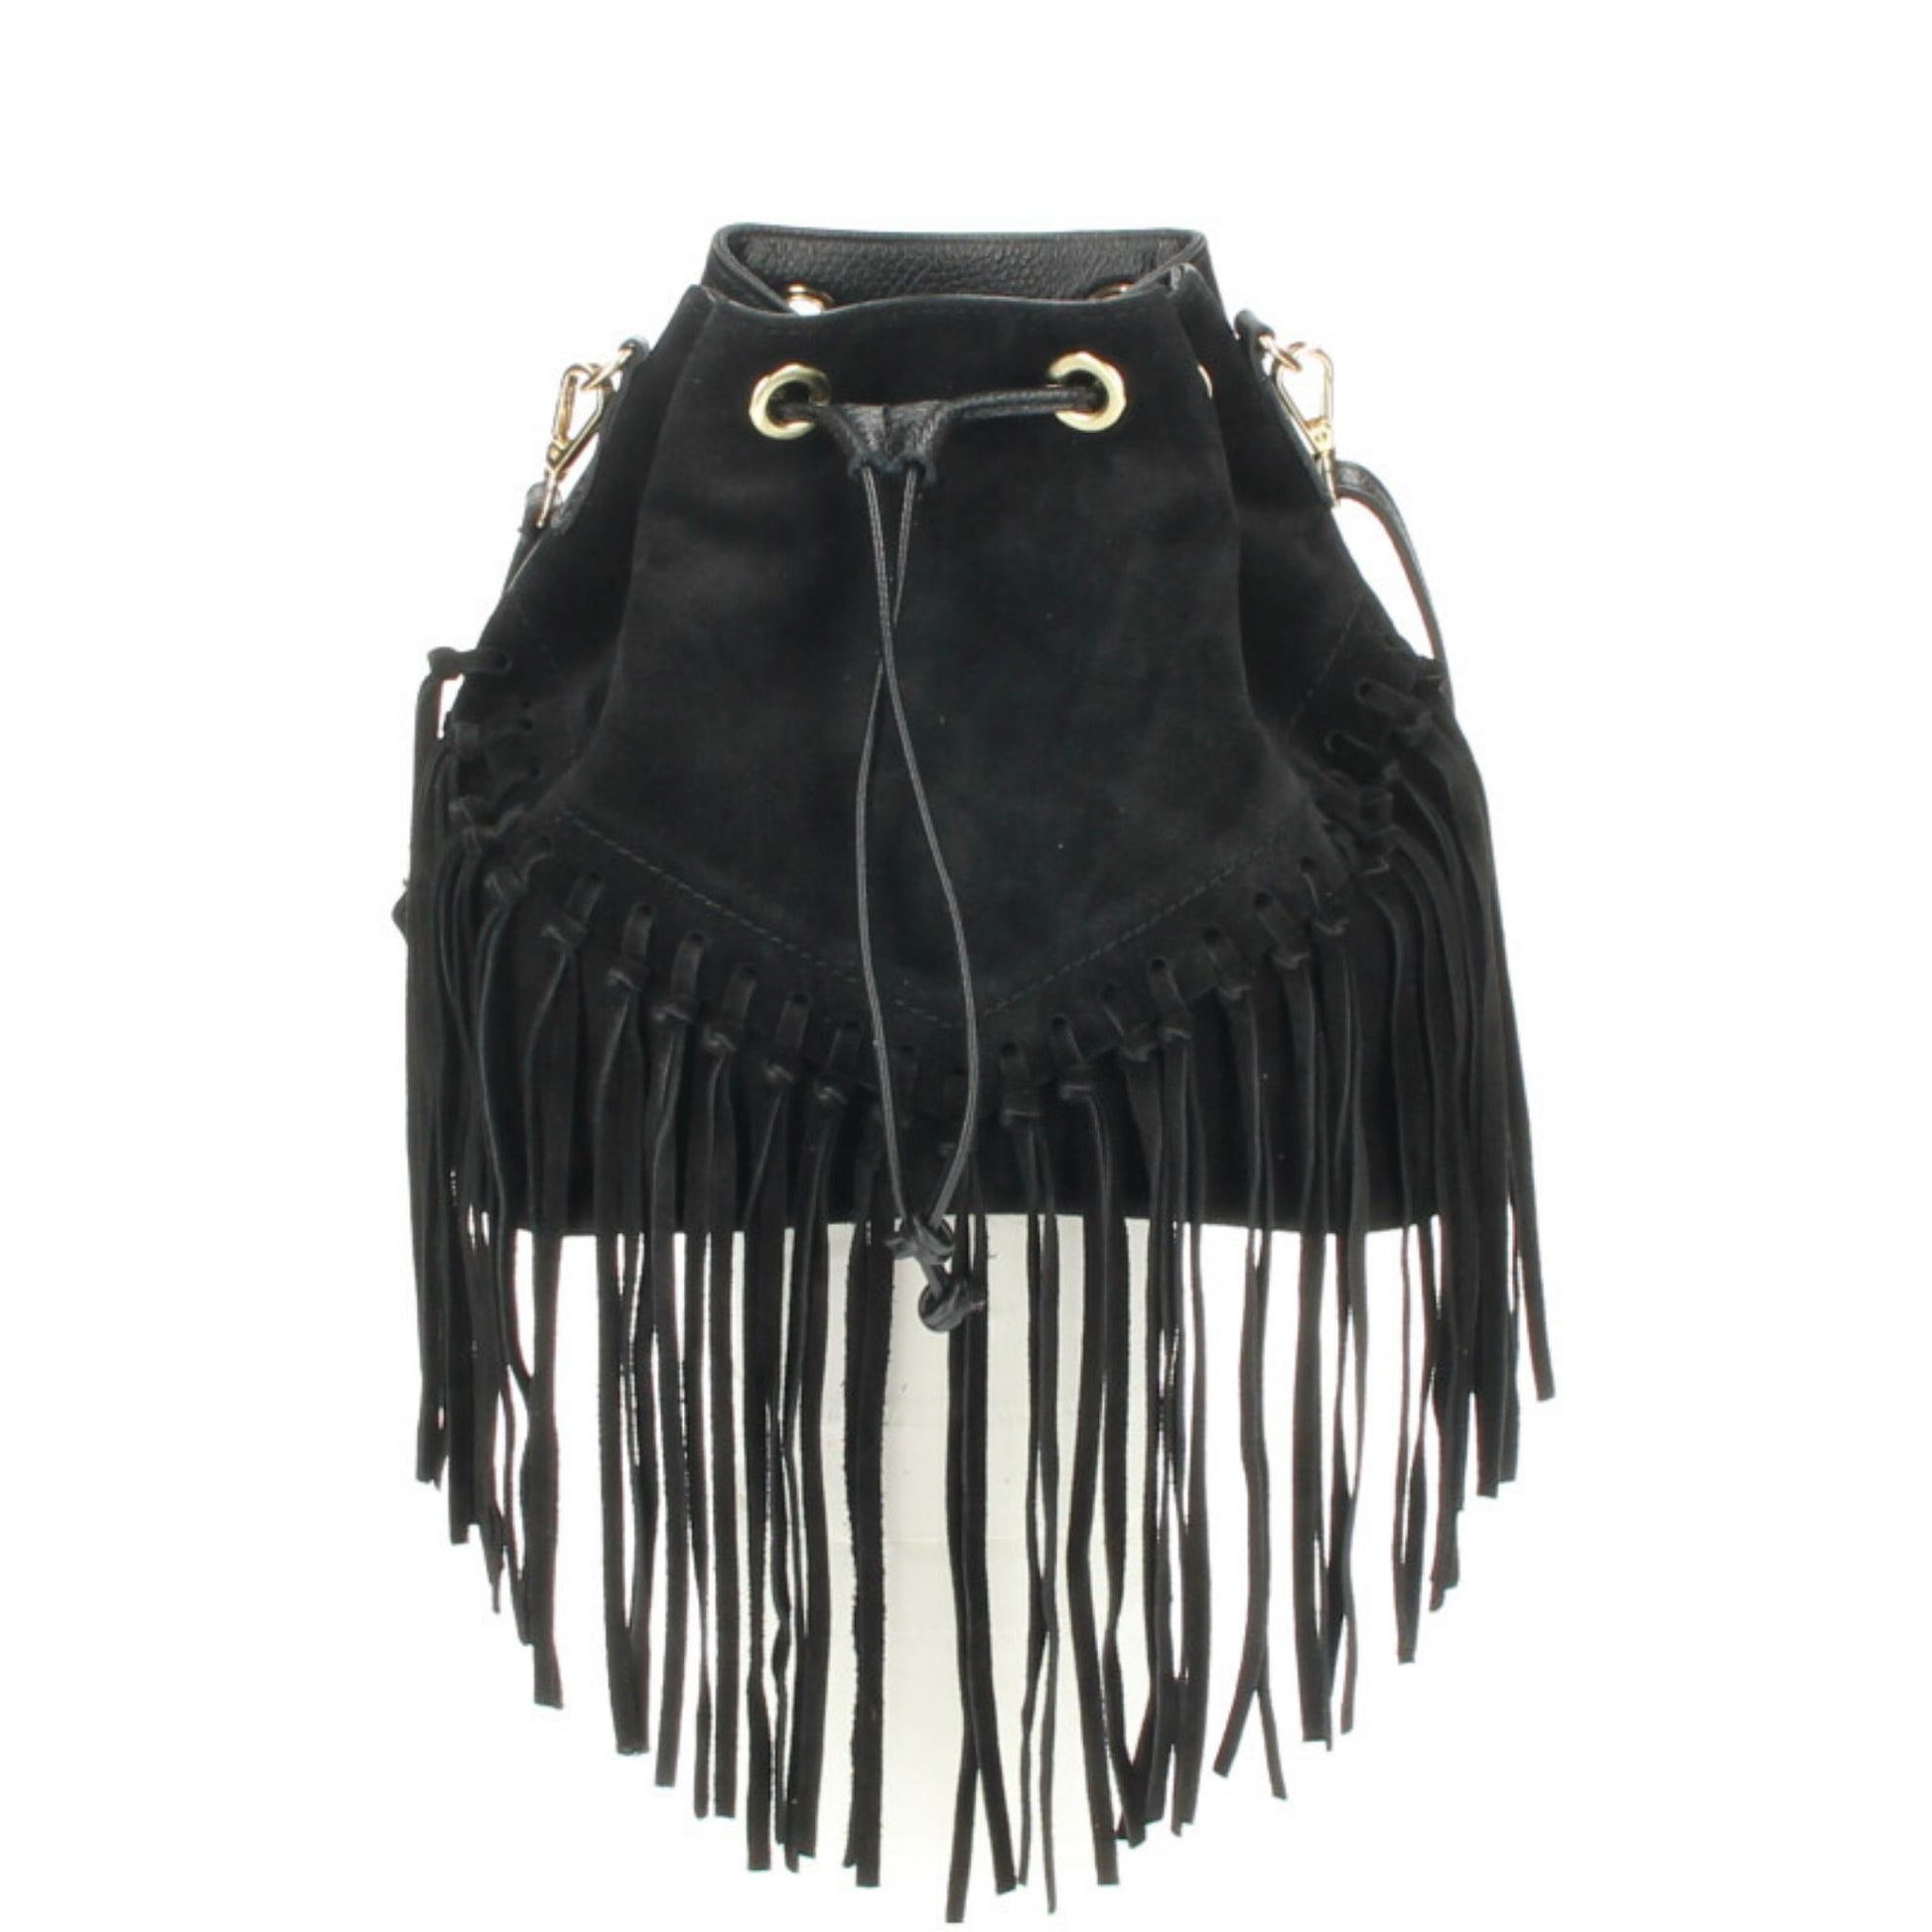 Black fringed handbag